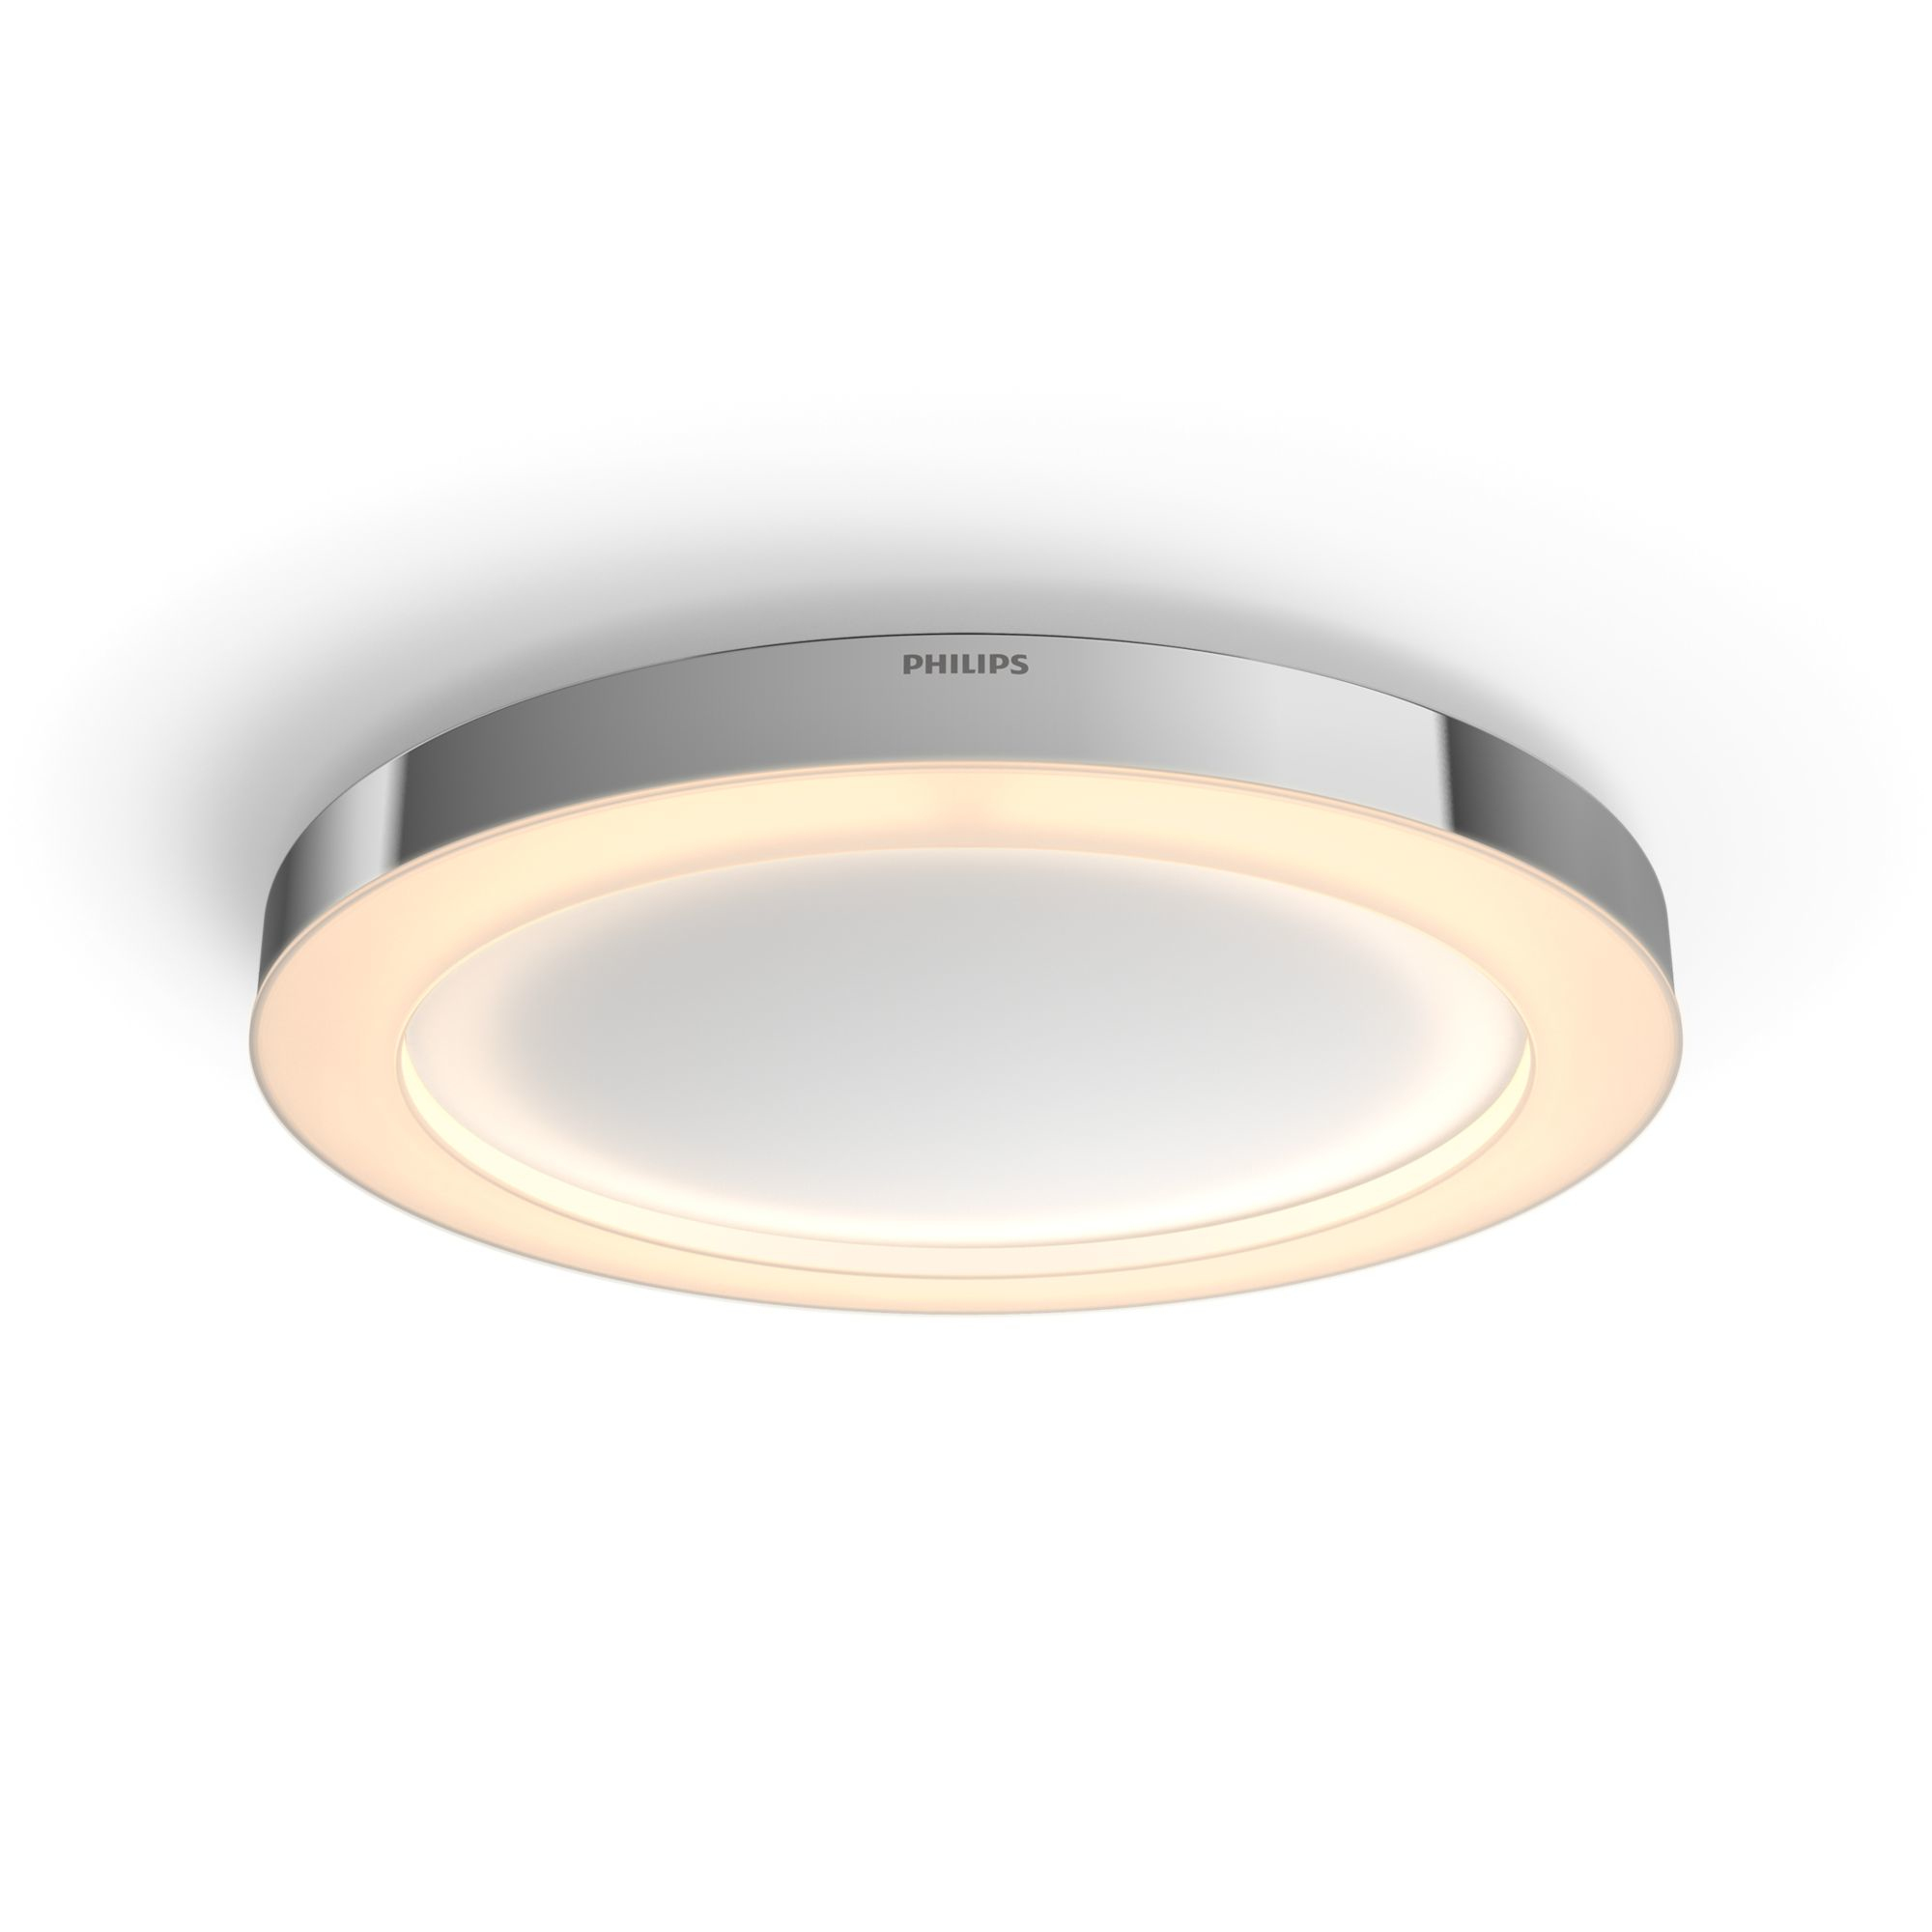 Philips by Signify Adore Bathroom plafondlamp